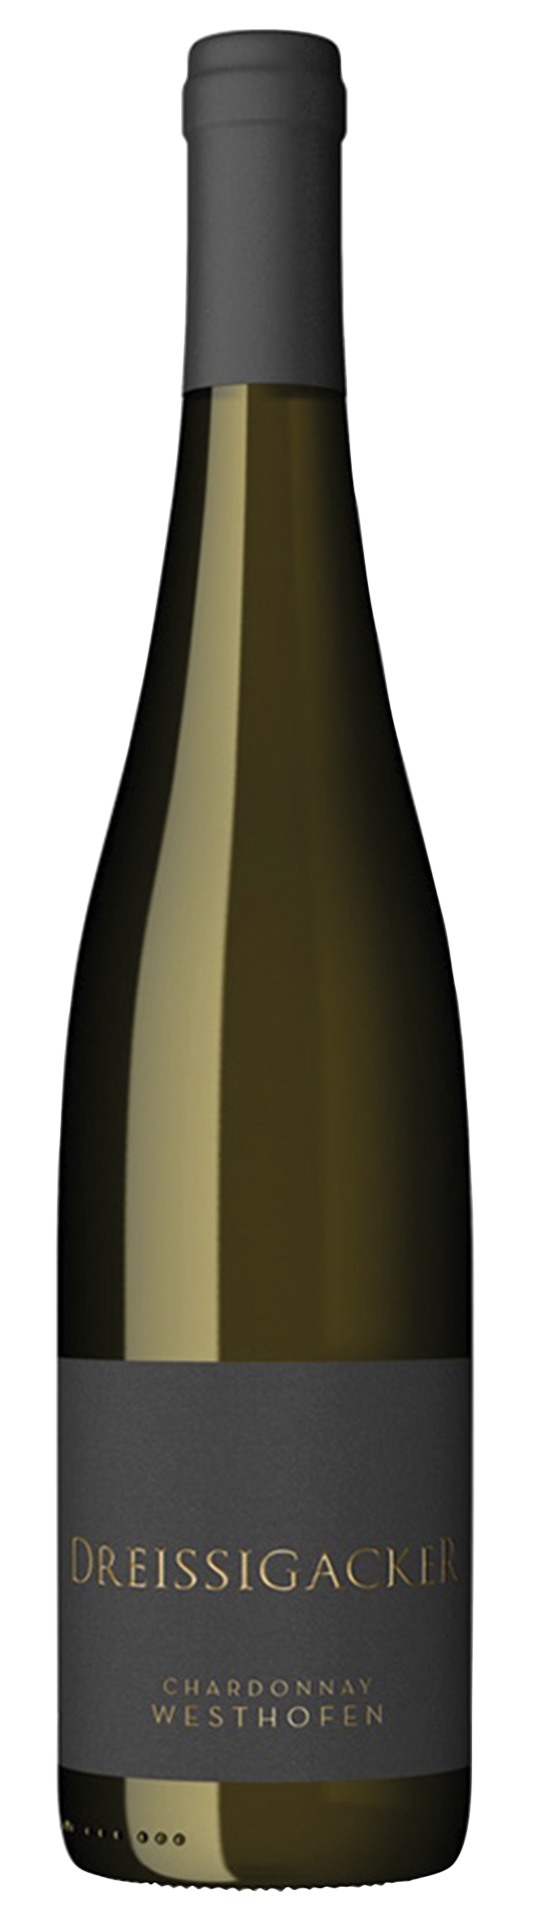 Dreissigacker Westhofener Chardonnay Qba tr 